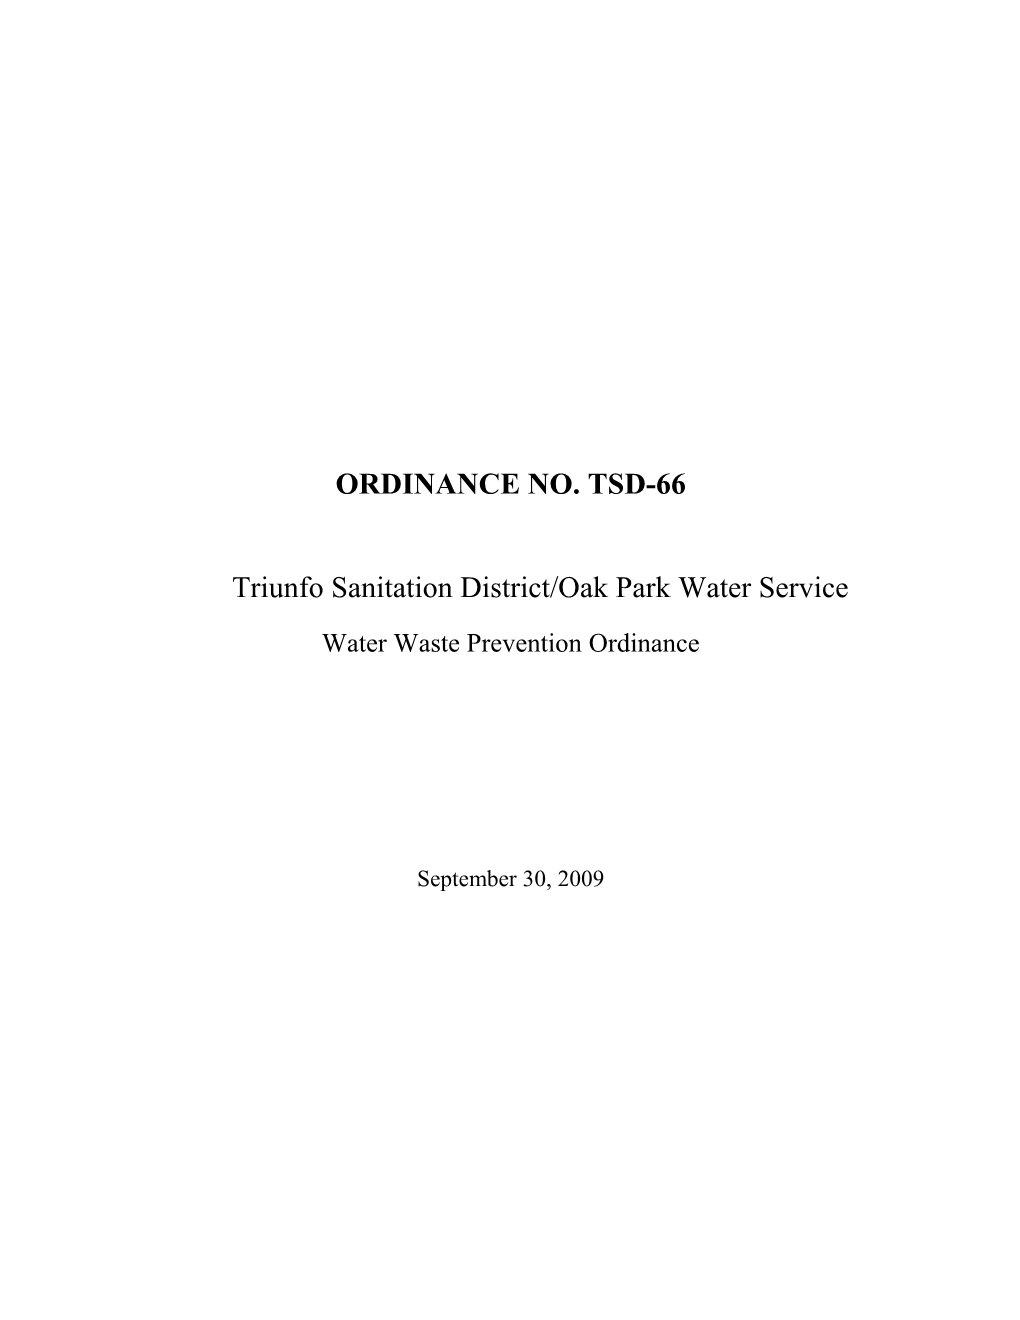 Triunfo Sanitation District/Oak Park Water Service